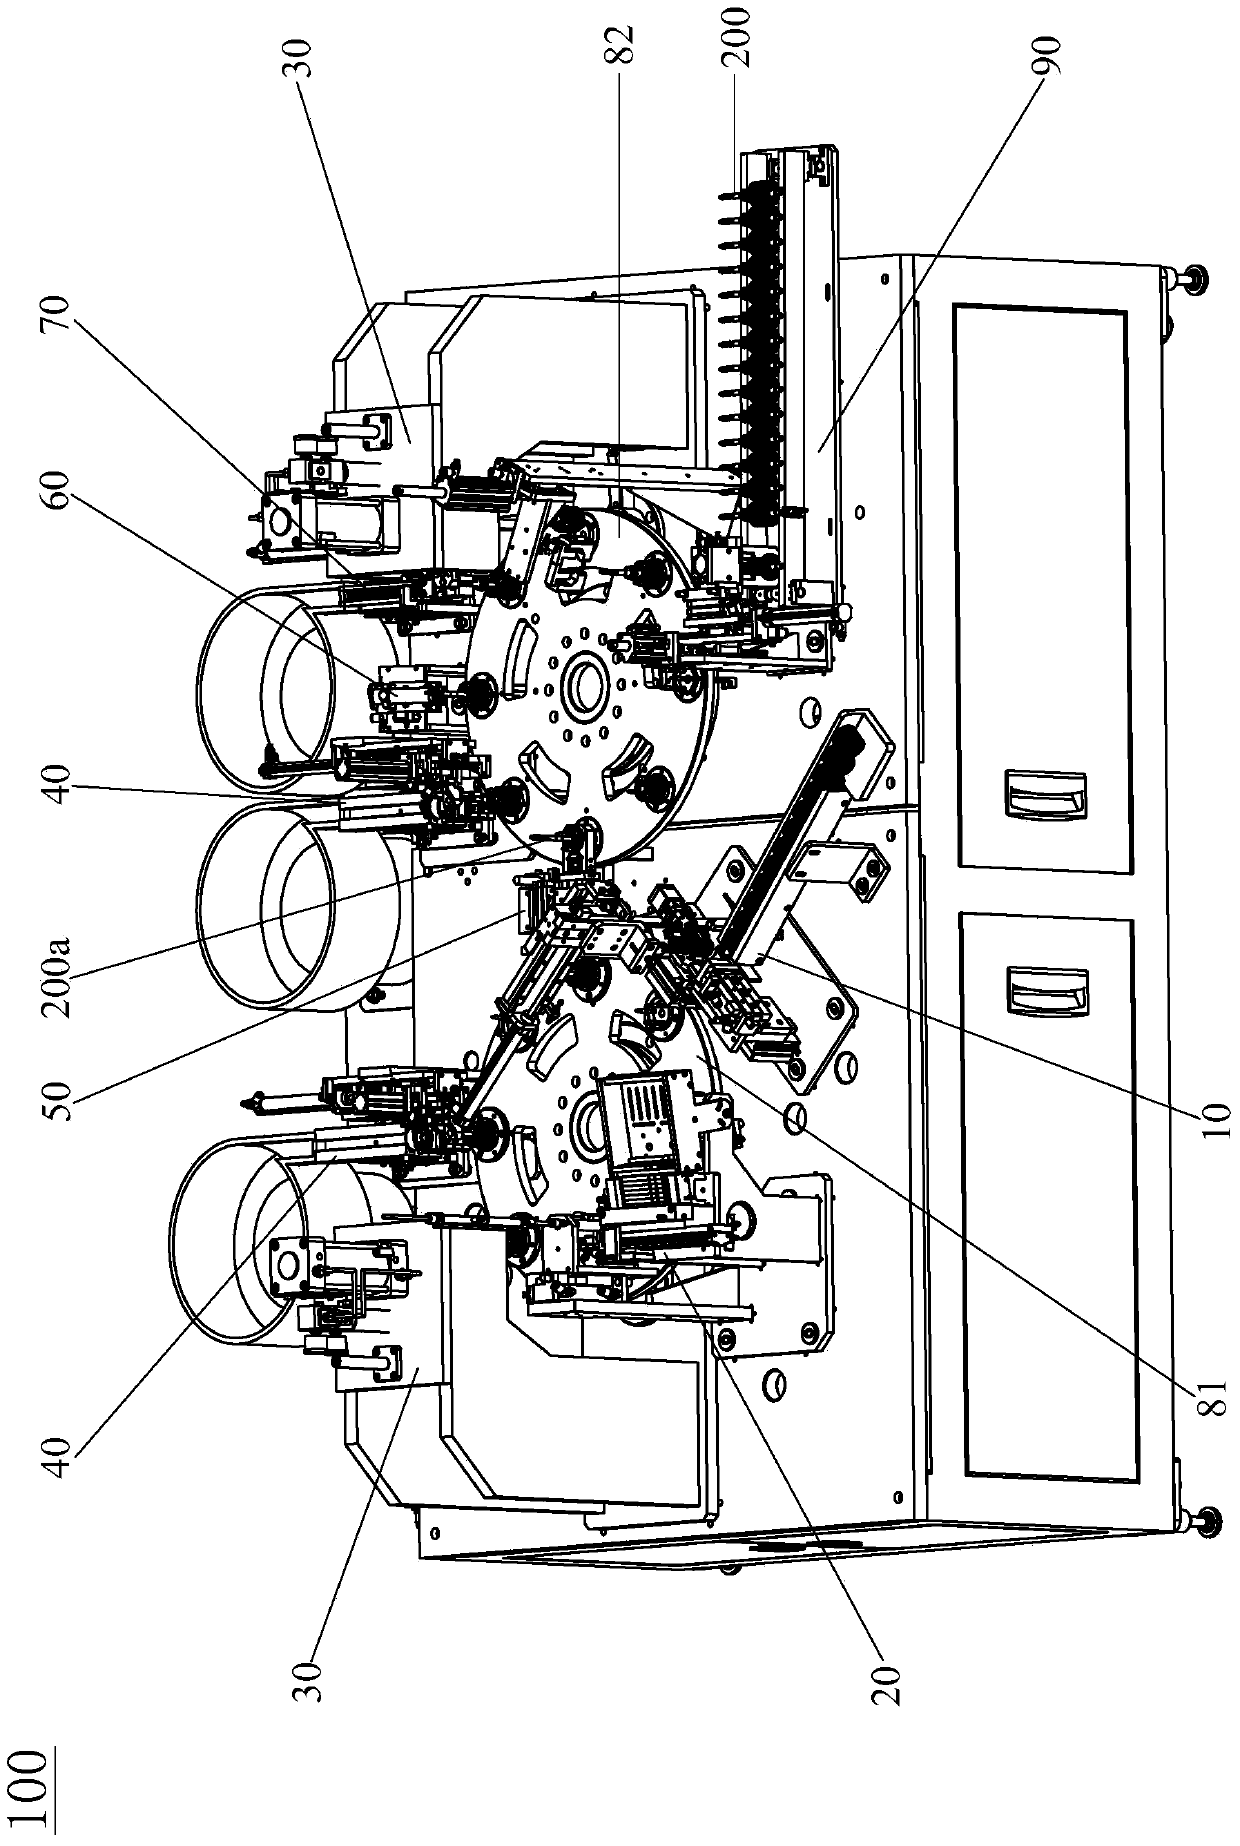 Motor rotor automatic assembly machine